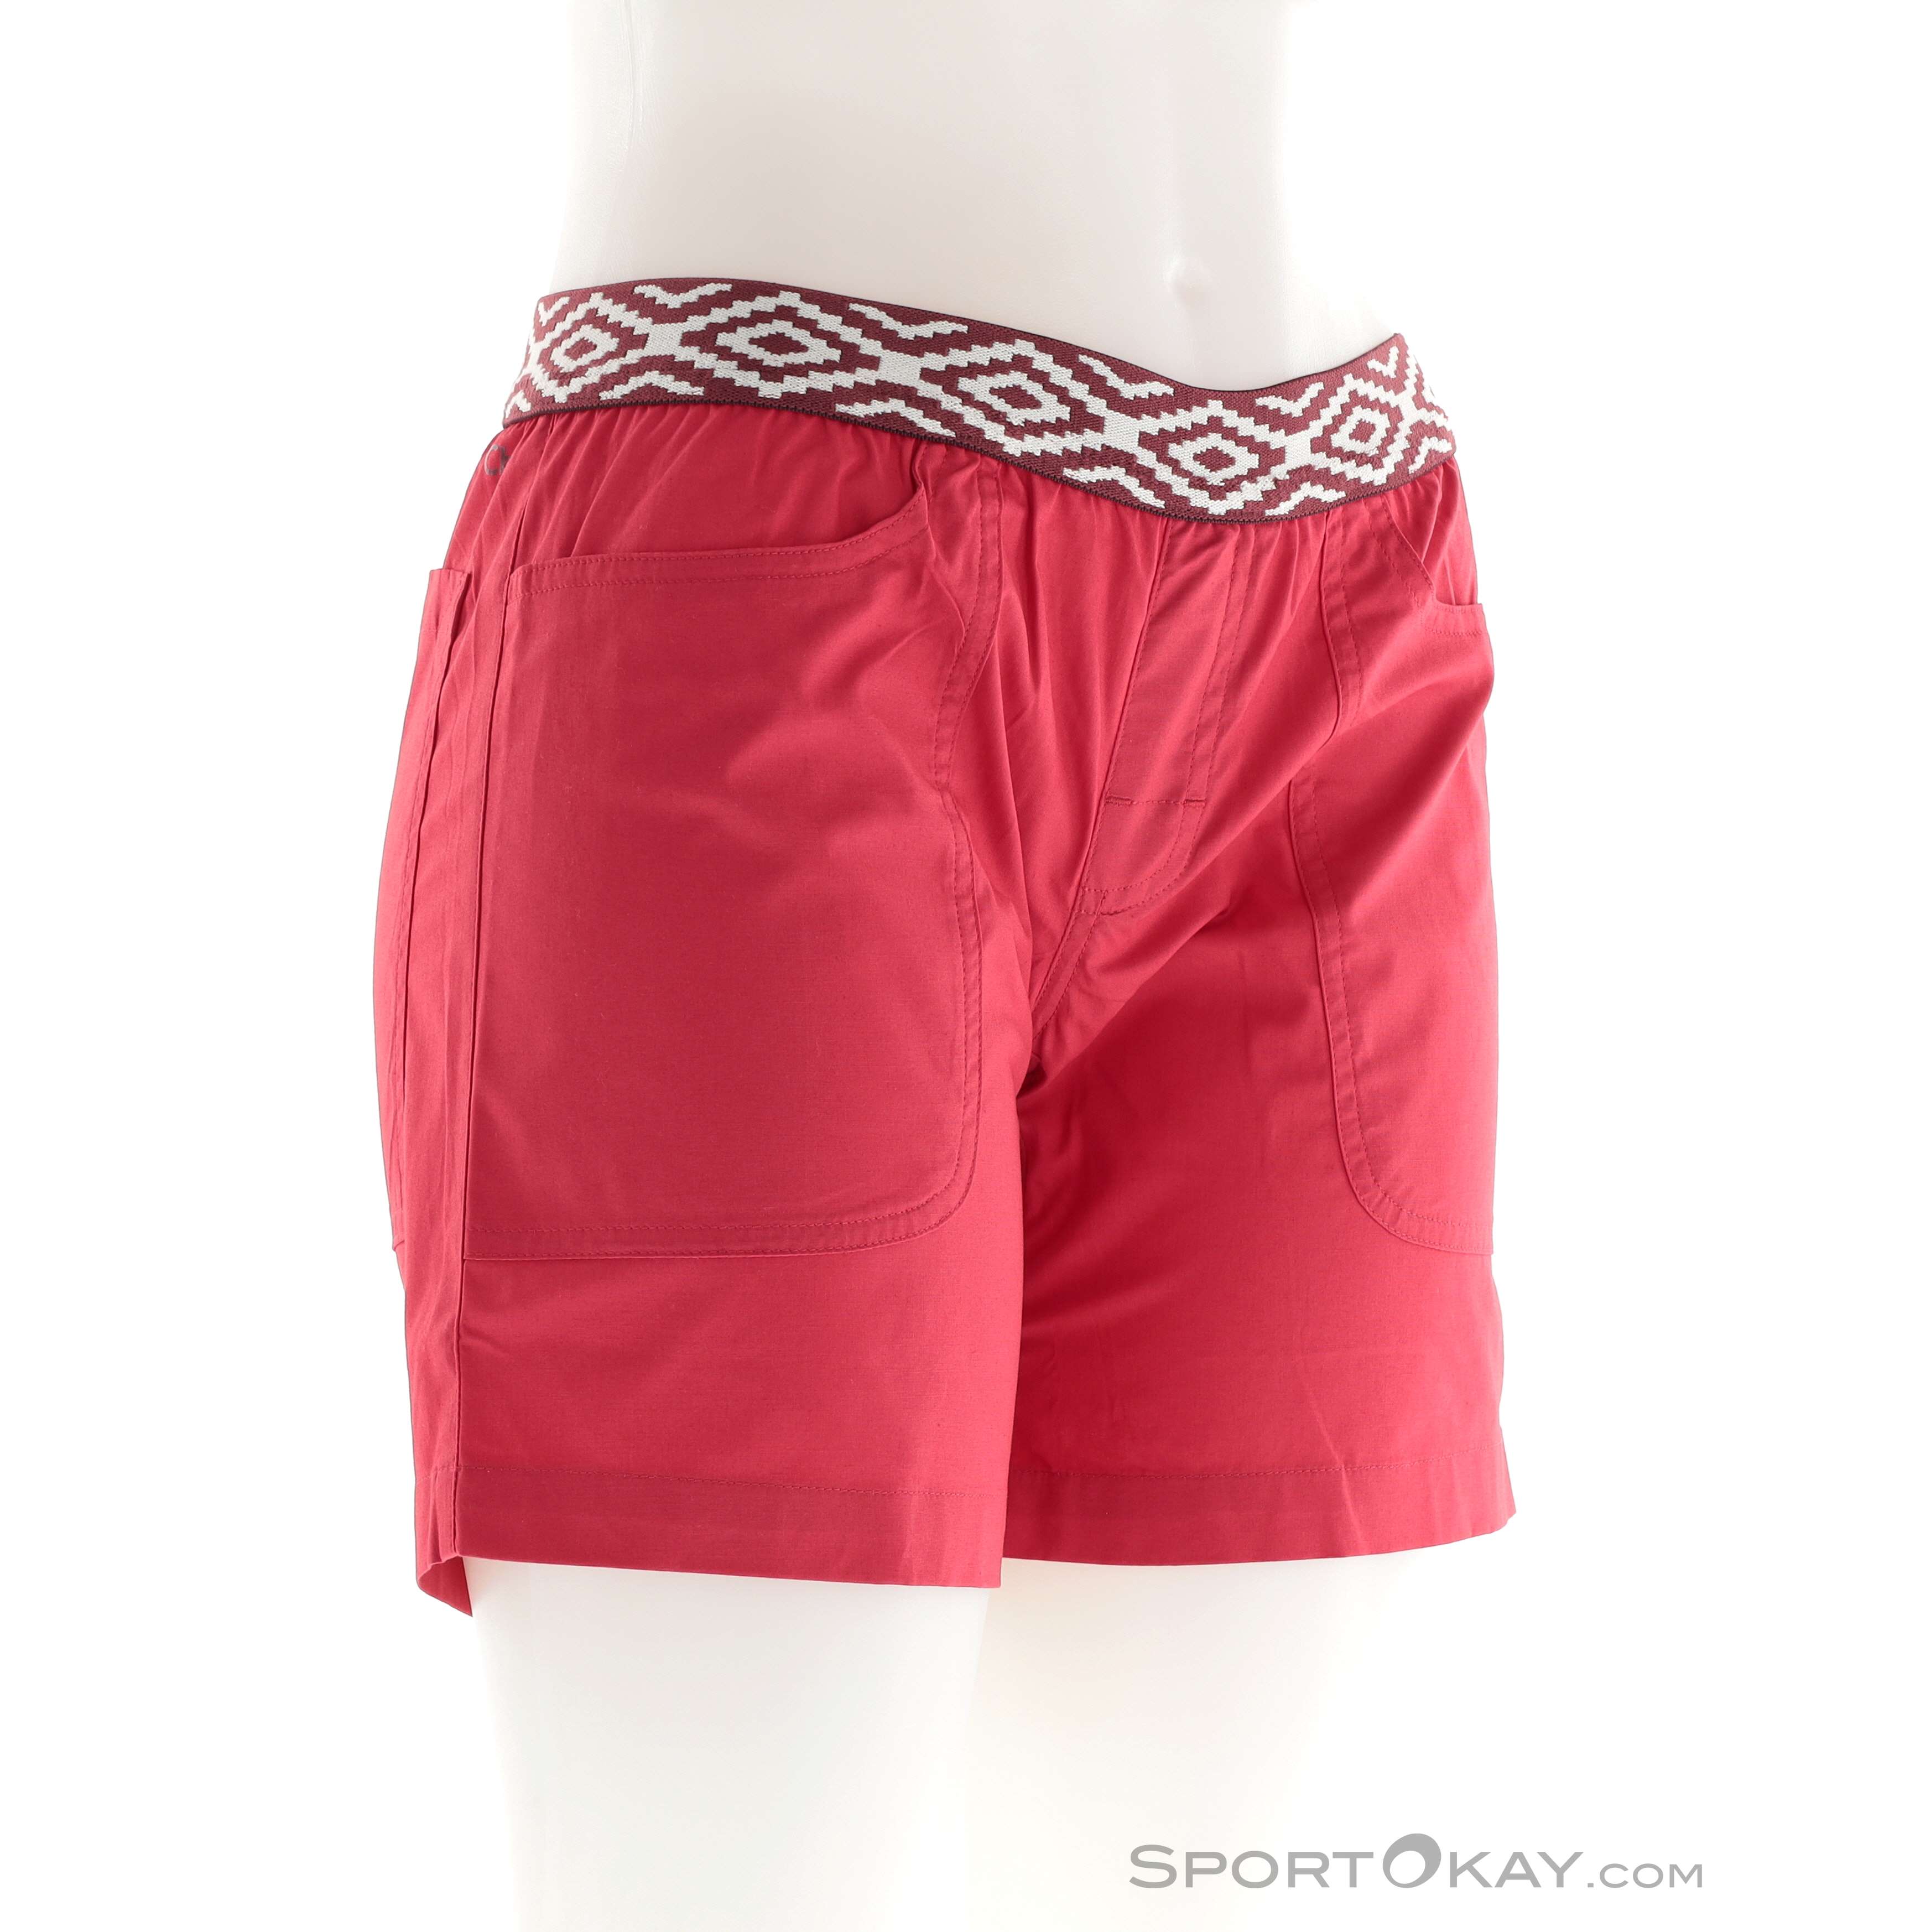 Red Chili Tarao Shorts Damen Klettershort-Pink-Rosa-L